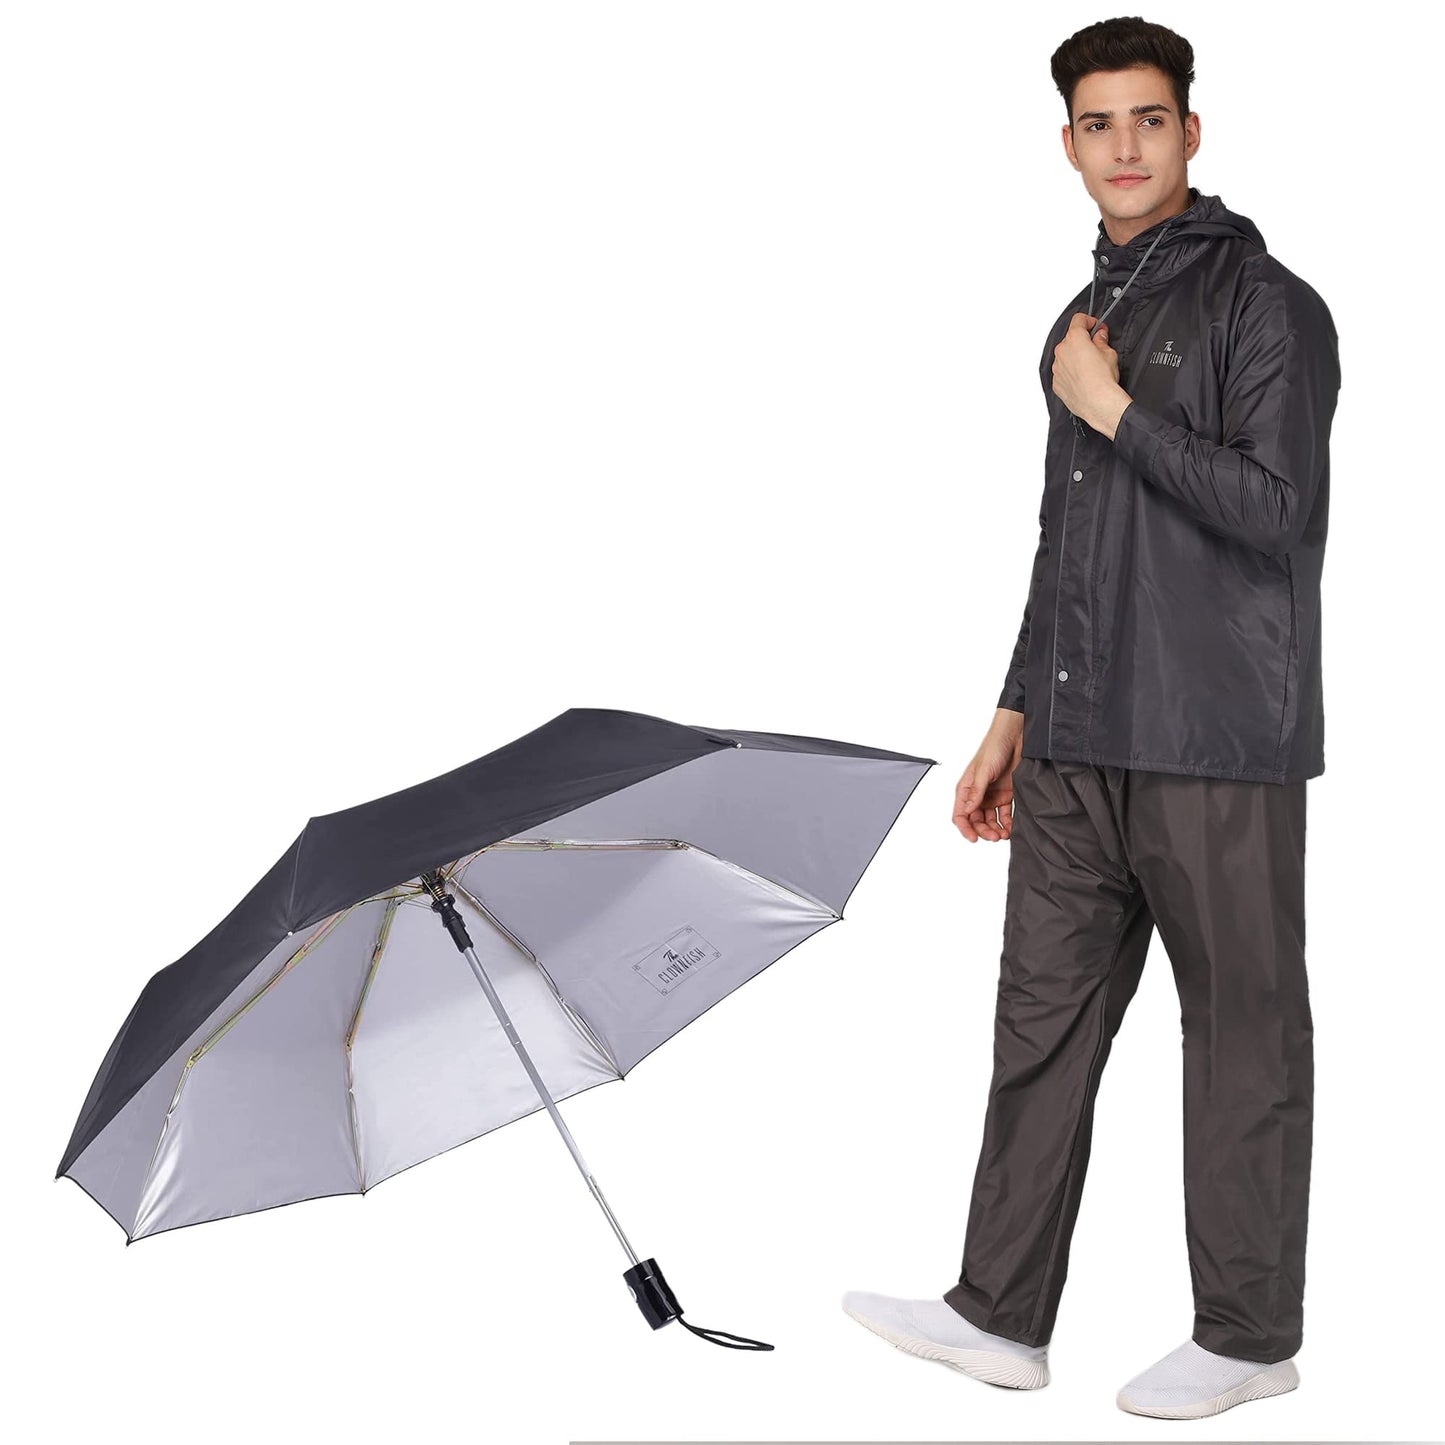 THE CLOWNFISH Combo Of Rain Coat for Men Waterproof Polyester (Grey XL) Umbrella Savior Series 3 Fold Waterproof Polyester (Black)